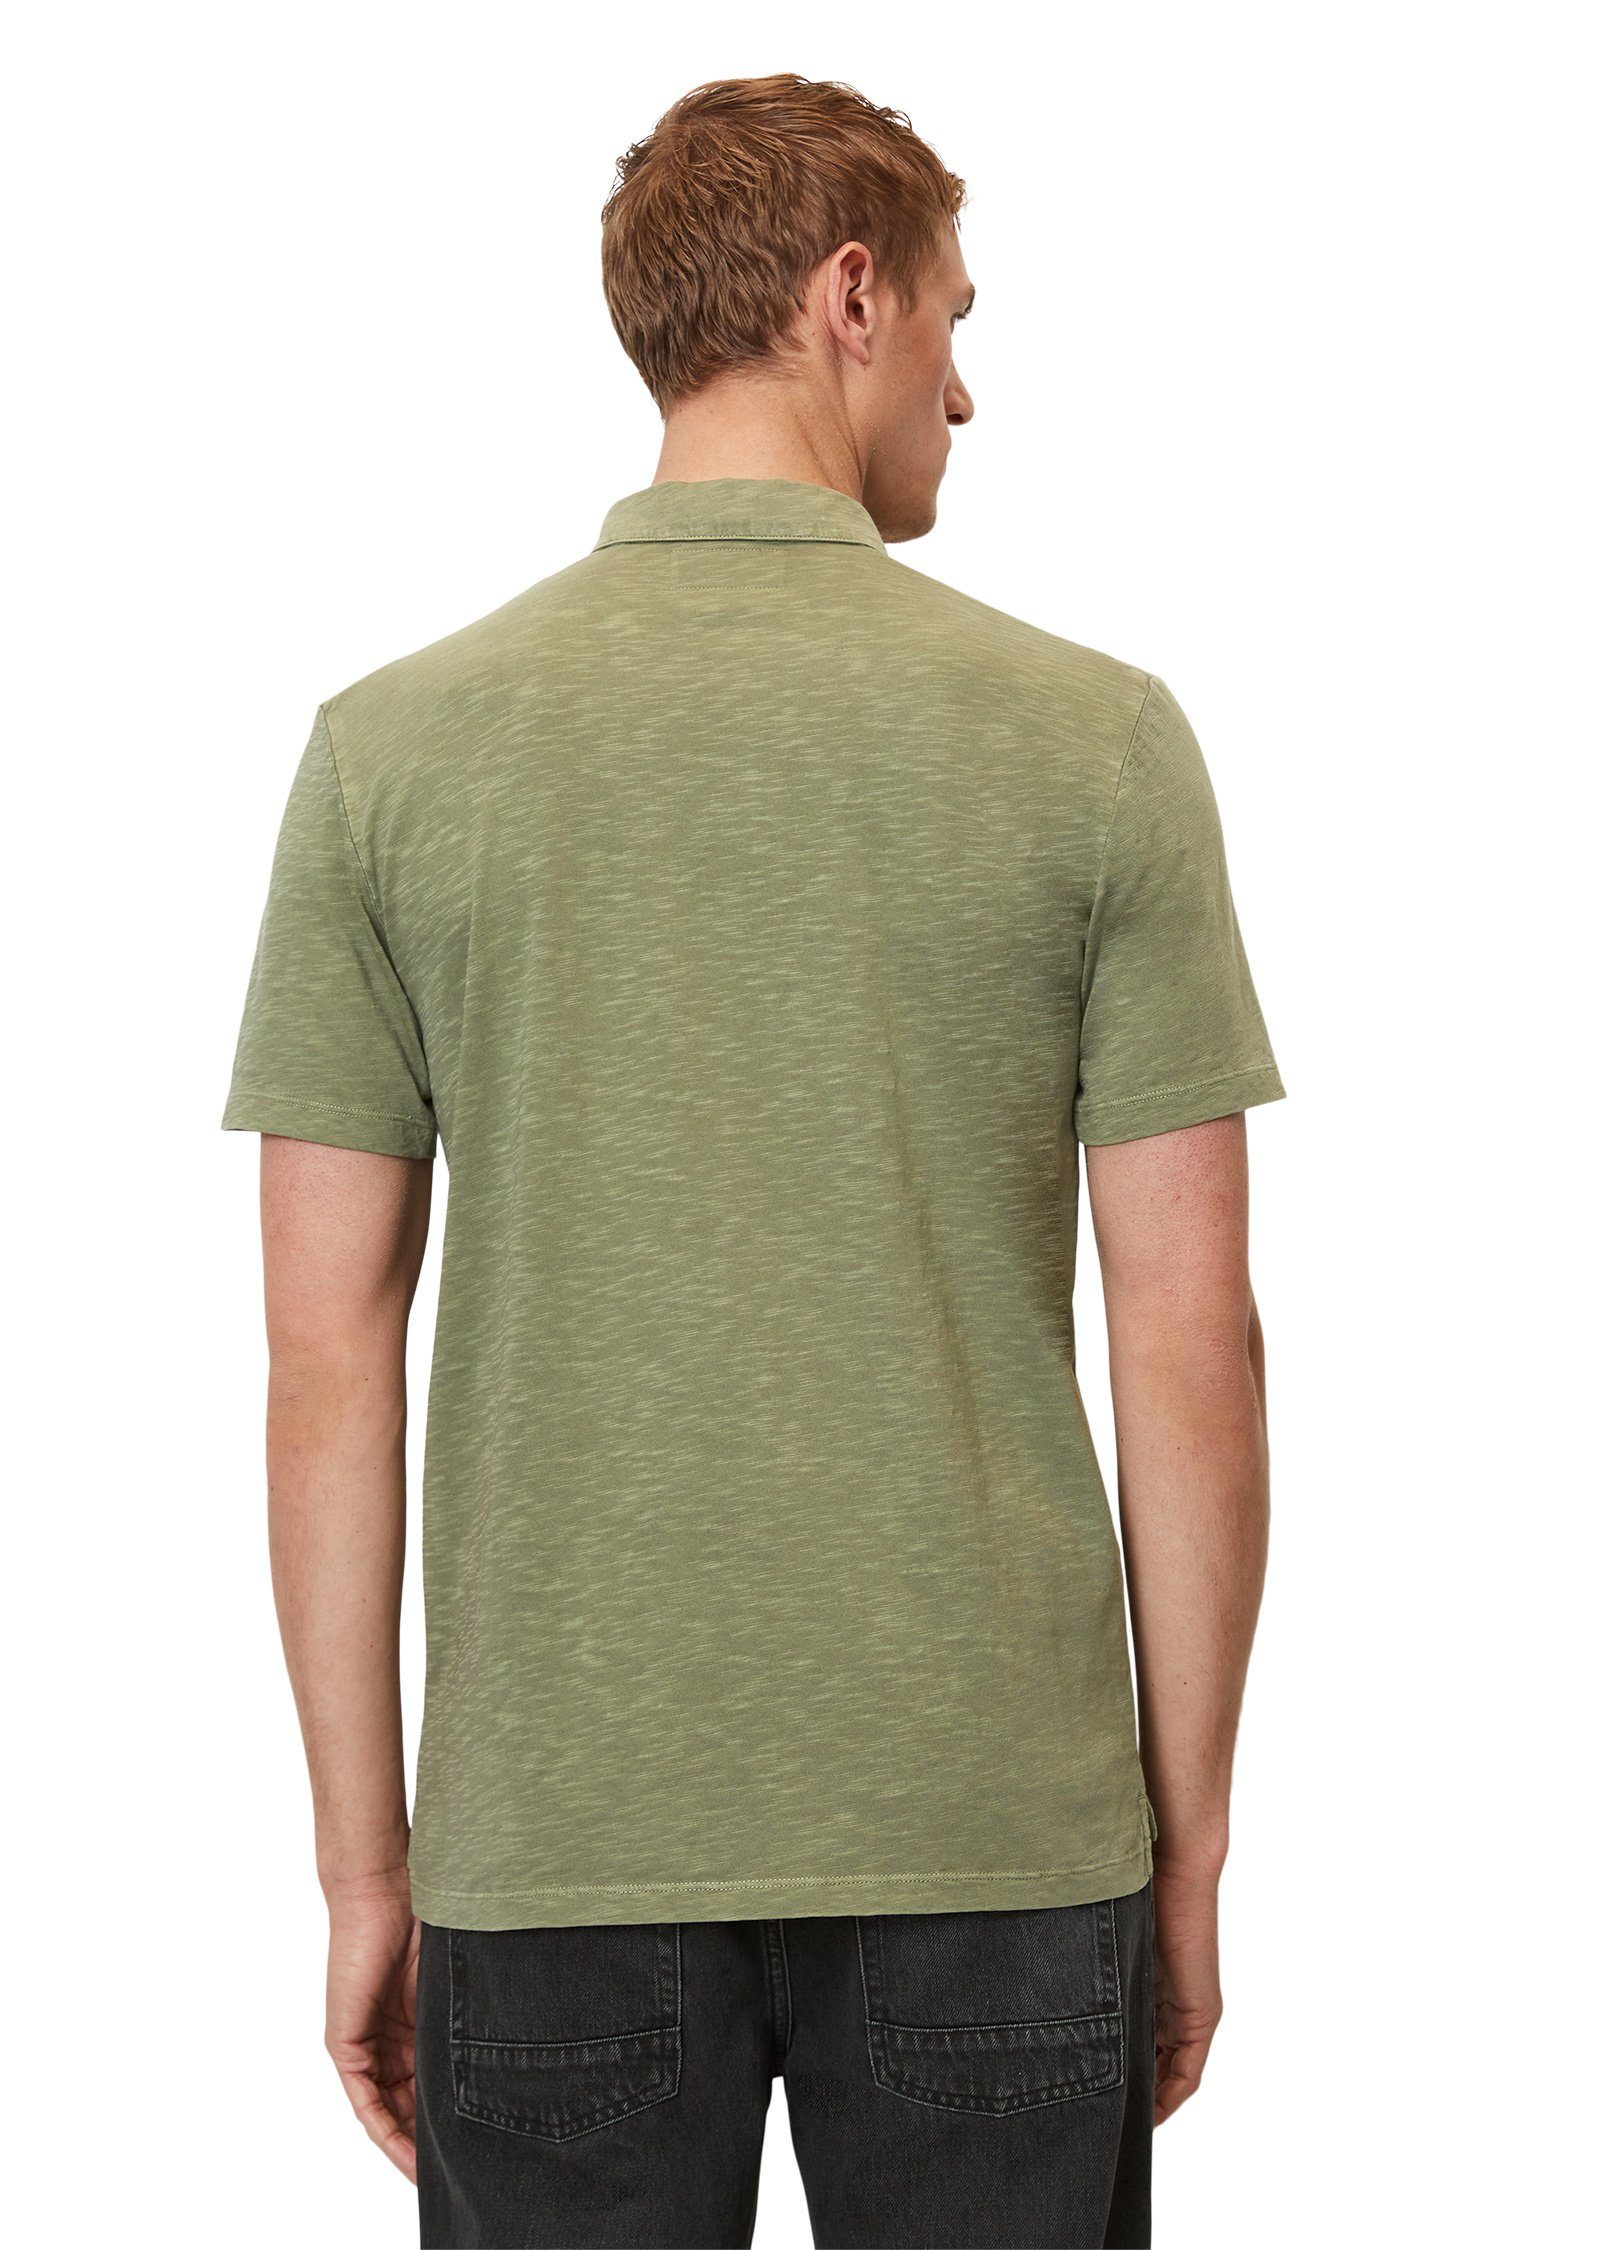 Marc O'Polo aus hochwertiger Bio-Baumwolle Poloshirt green